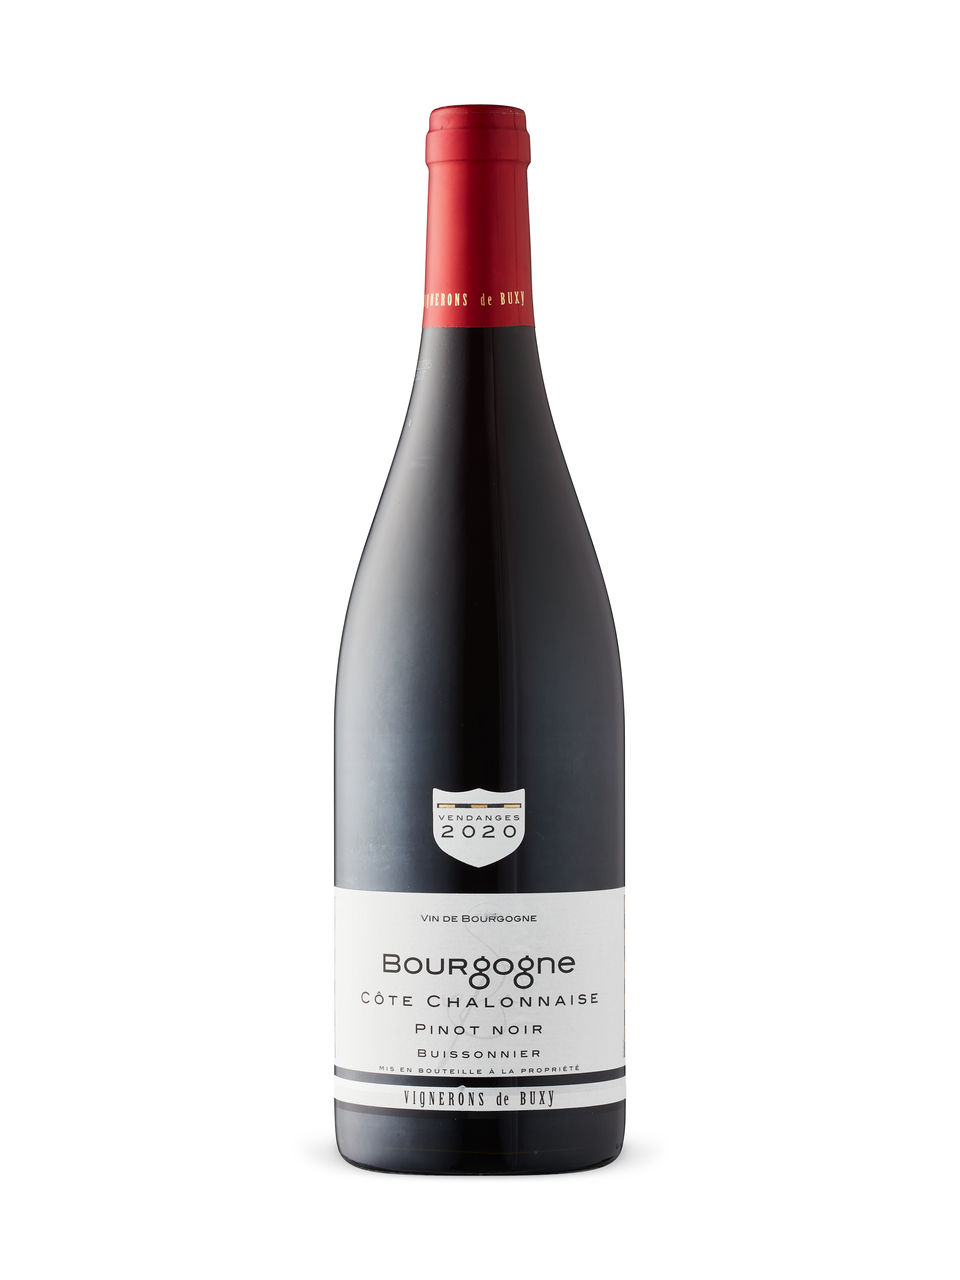 Bourgogne Pinot Noir, Côte Chalonnaise, Vignerons Buxy (Bourgogne